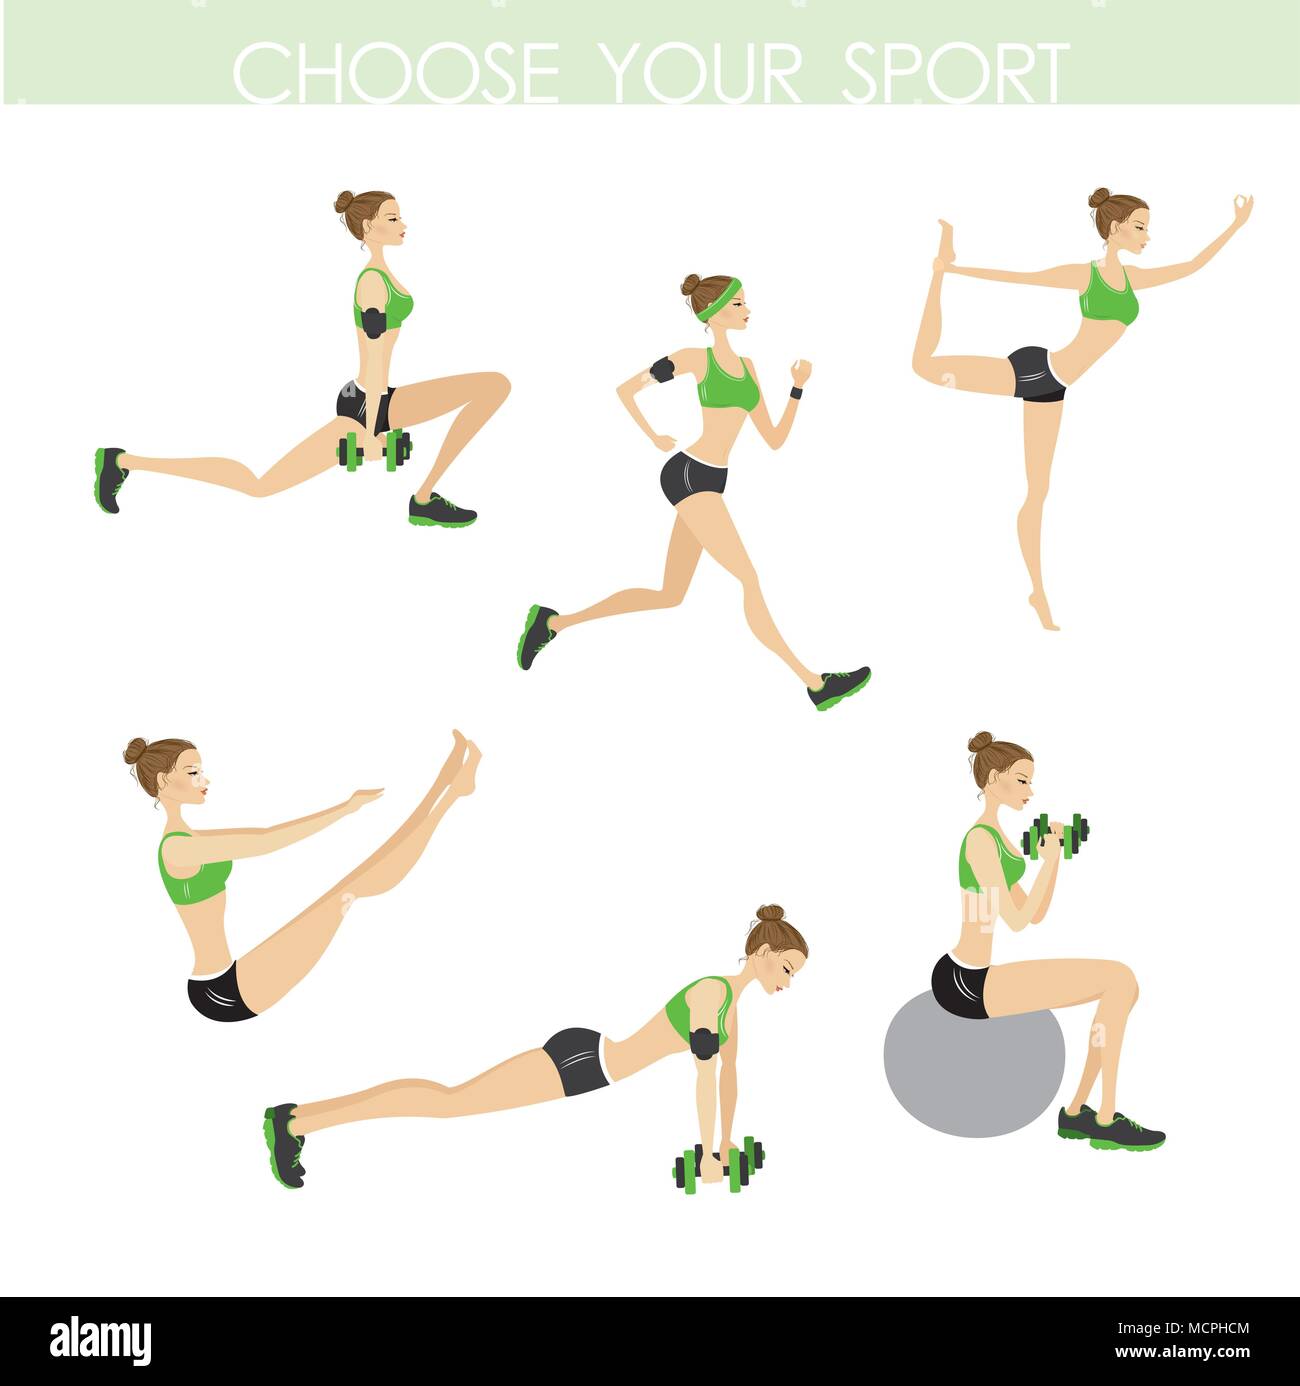 Chest workout set on white background. Exercises for women. Hard training  Stock Vector Image & Art - Alamy